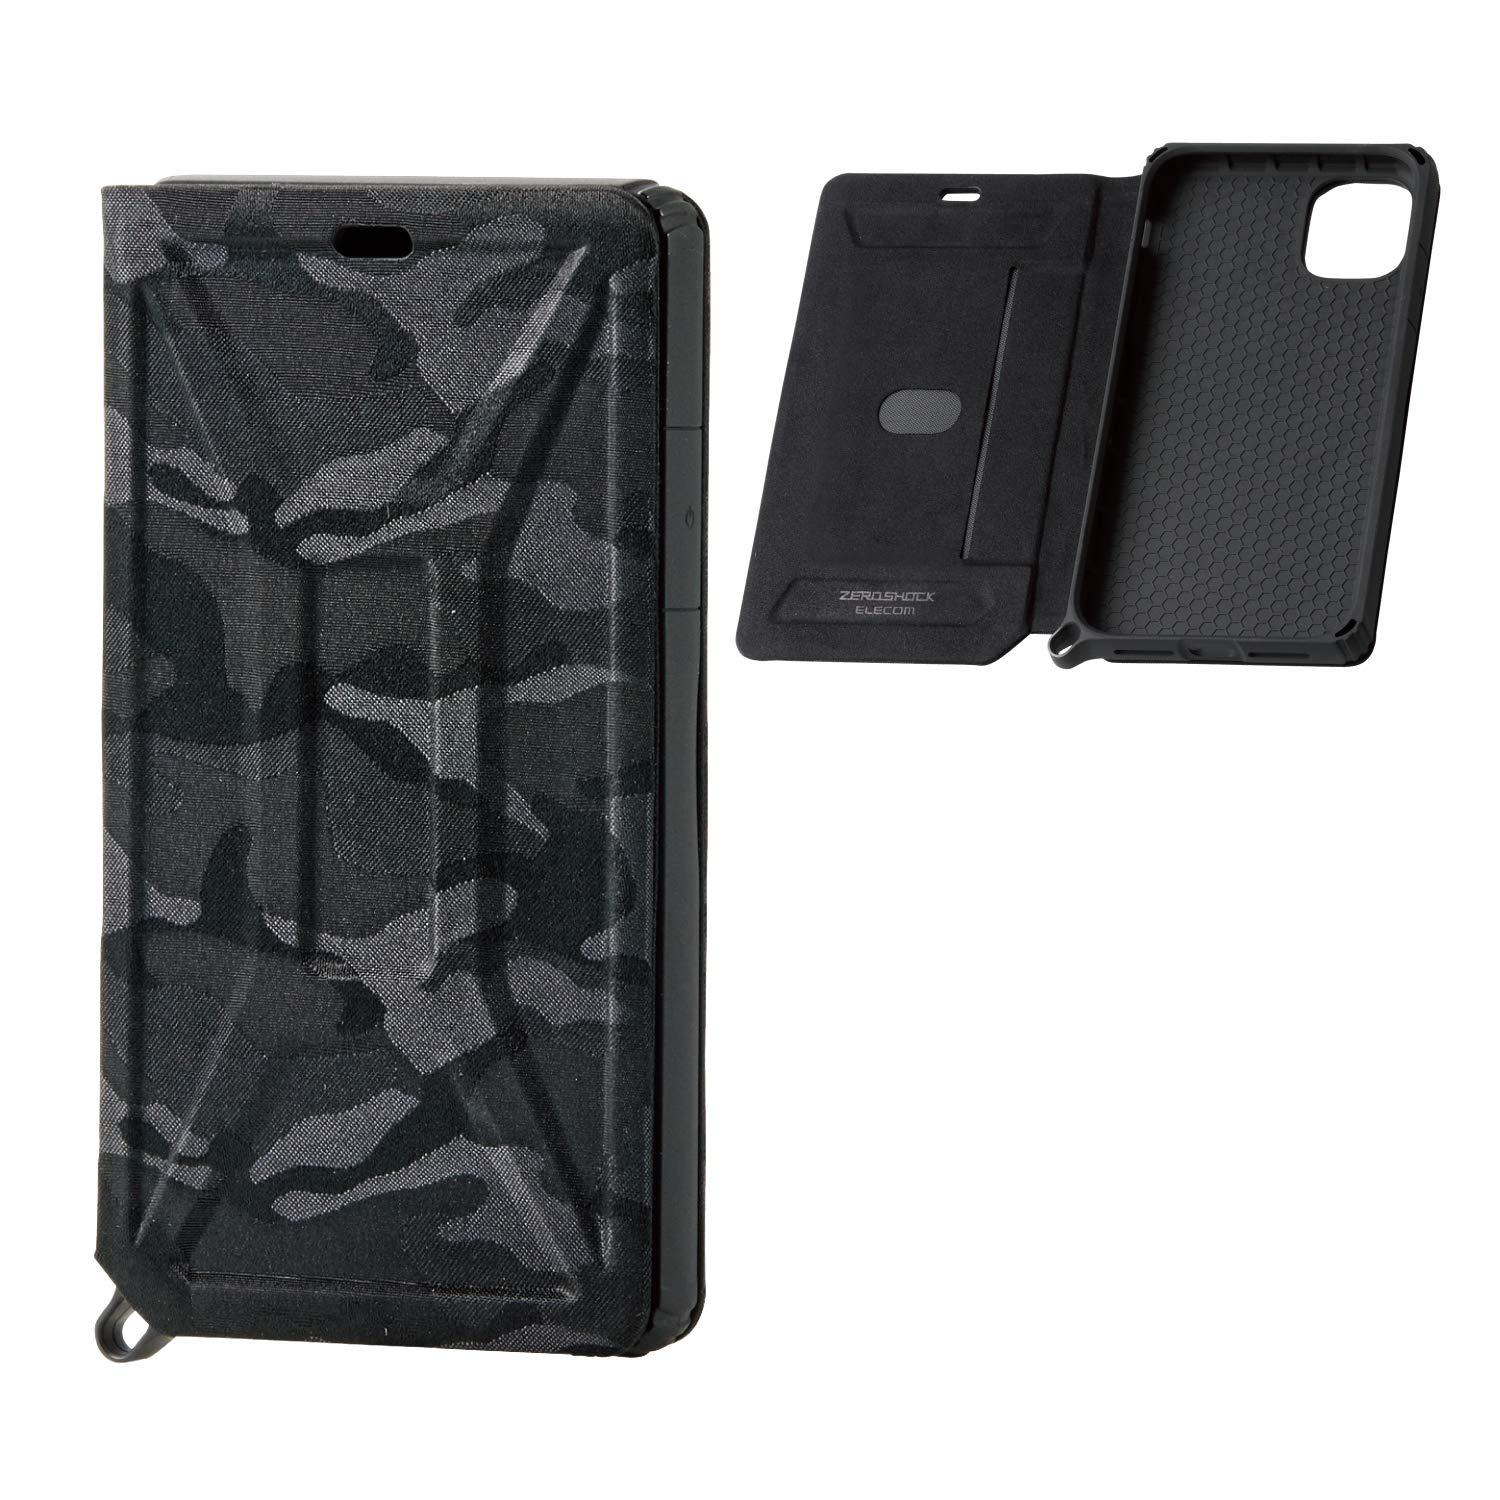 ELECOM-Japan Brand- Zero Shock Flip Case/Compatible with iPhone11 Pro  5.8inch Card Slot/Book Style/Black PM-A19BZEROFT1 Lazada PH